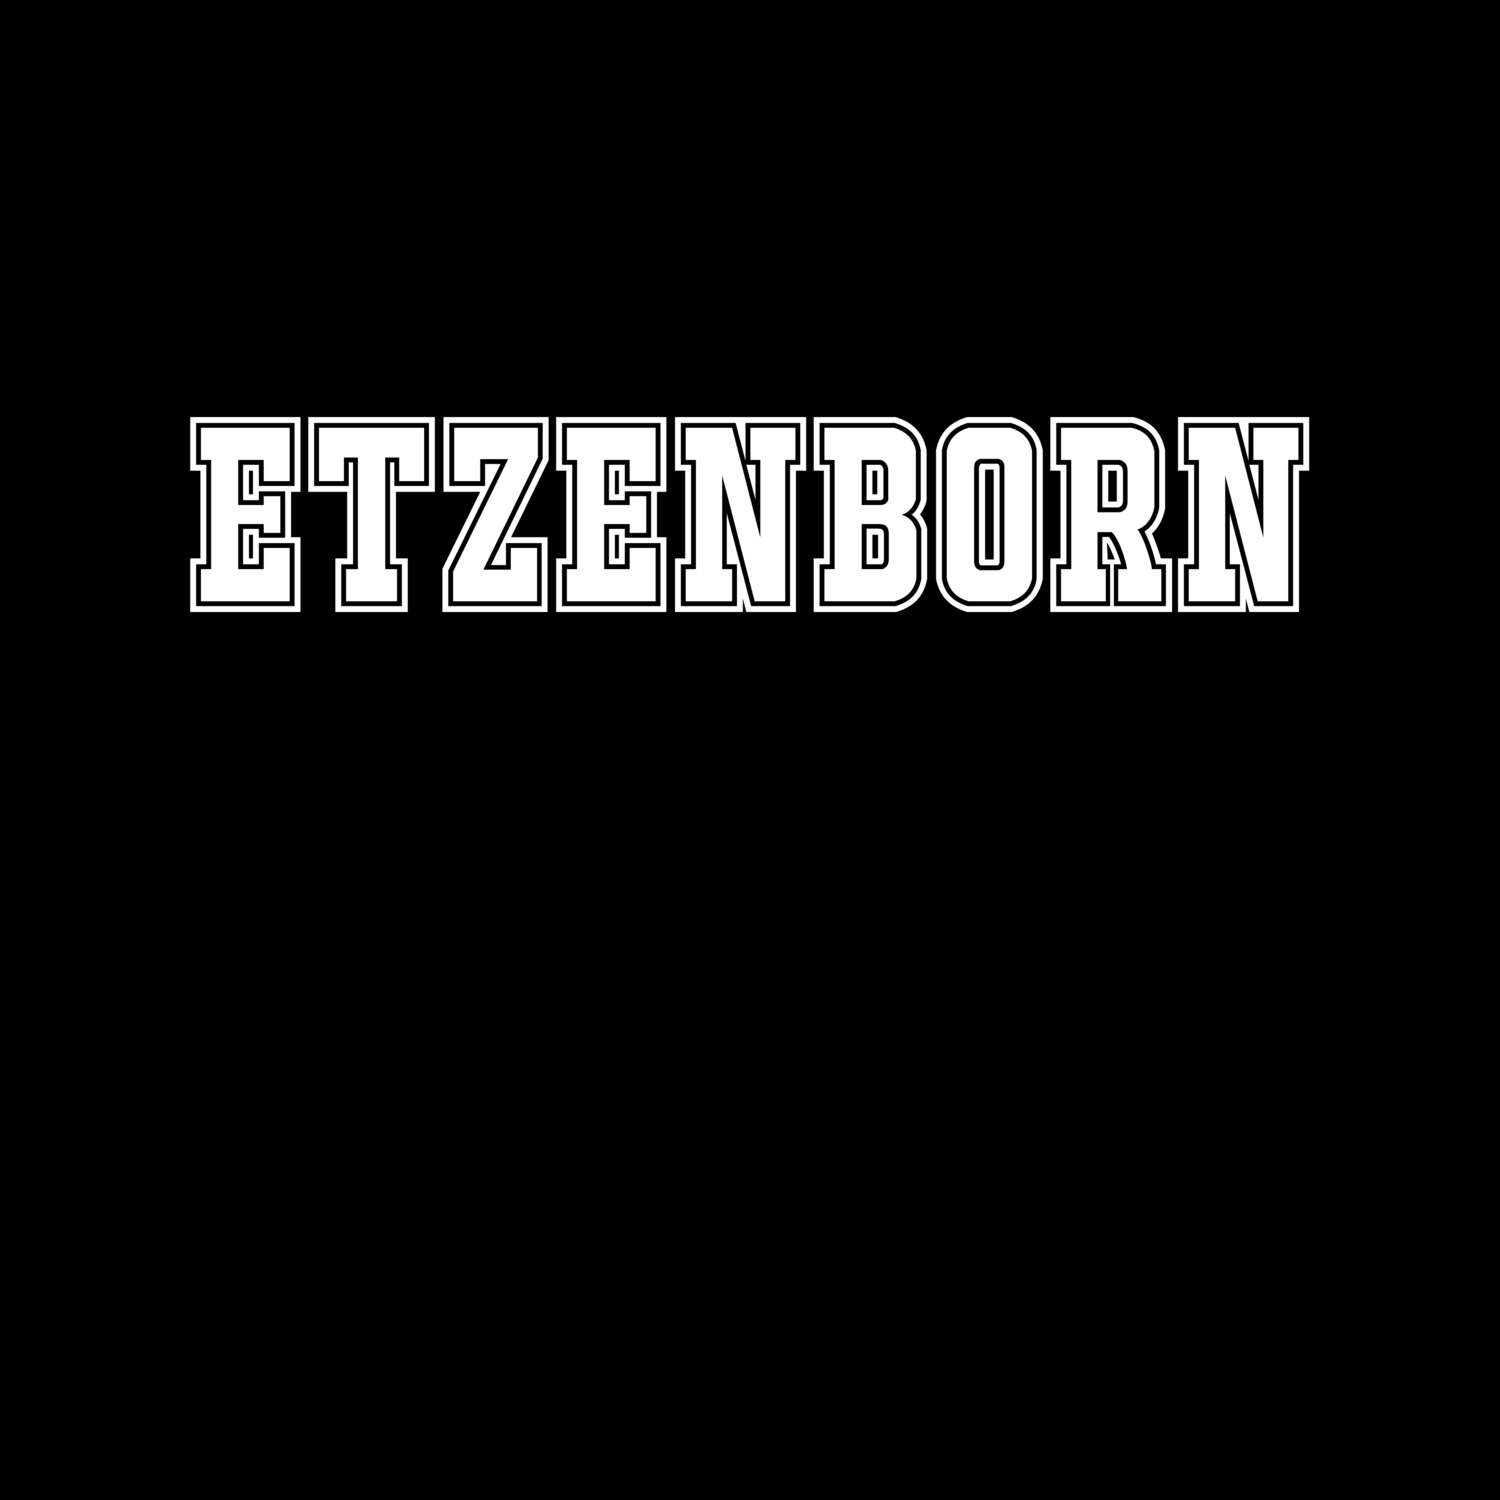 Etzenborn T-Shirt »Classic«